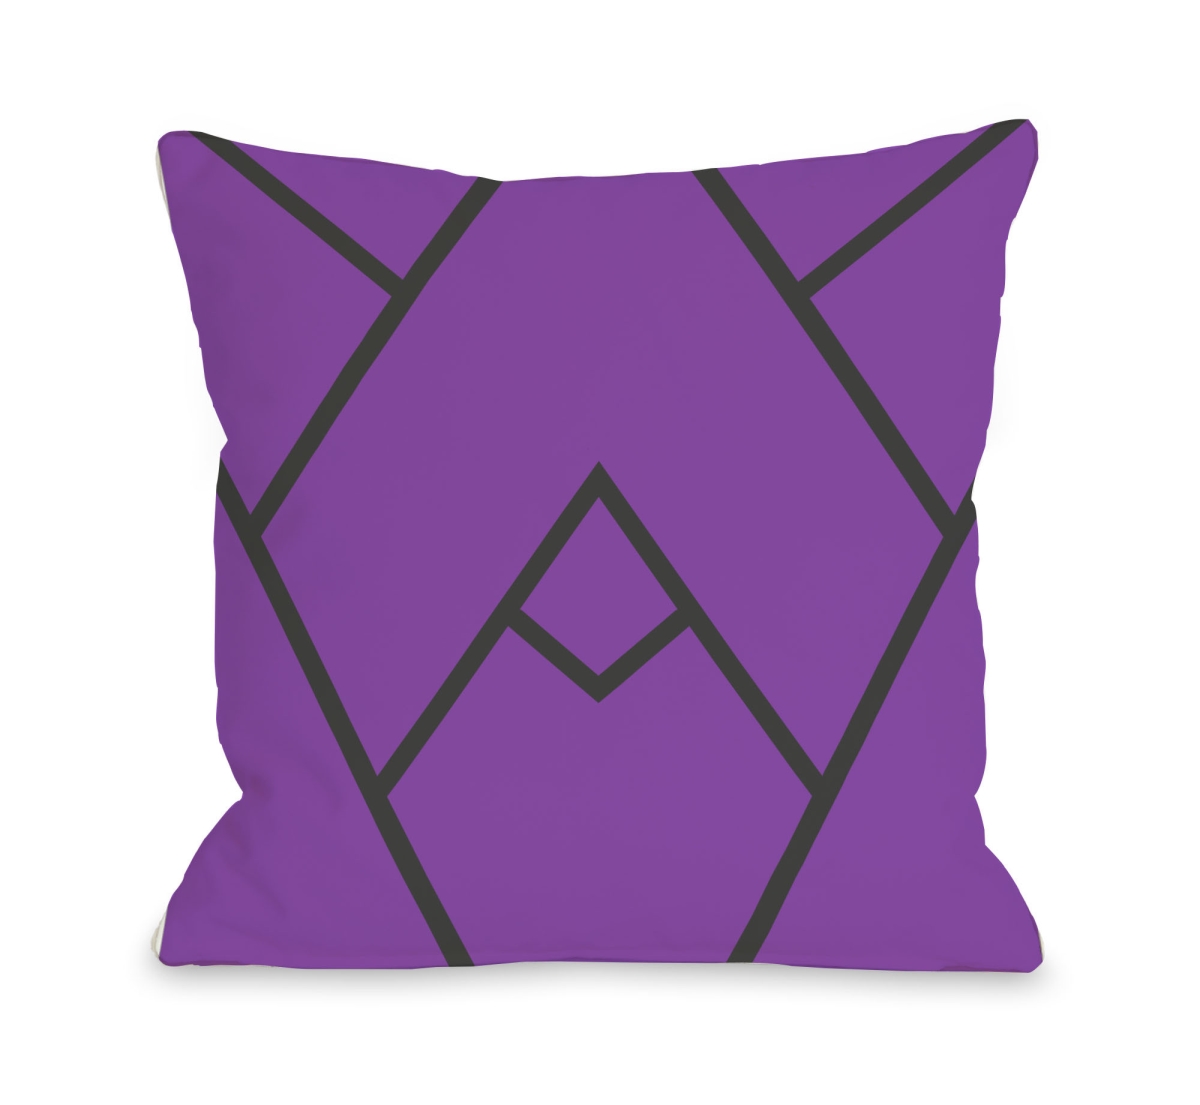 70716pl16o 16 X 16 In. Mountain Peak Pillow Outdoor, Purple